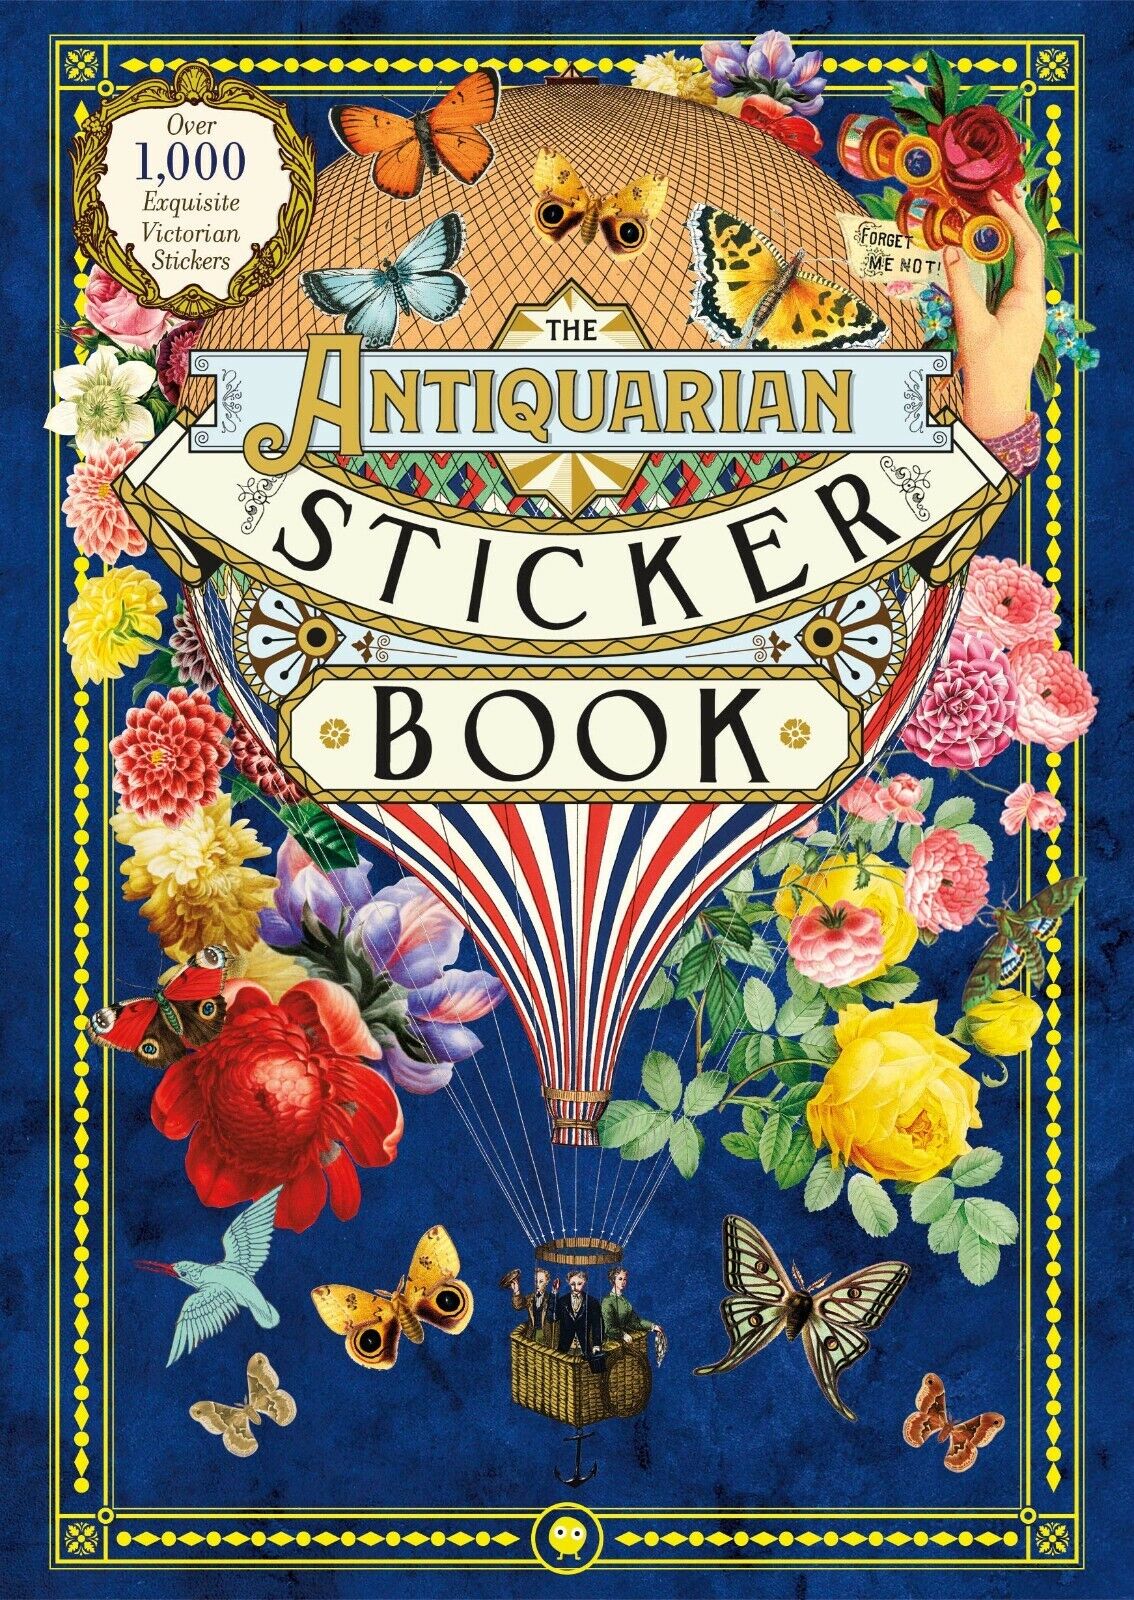 The Antiquarian Sticker Book An Illustrated Compendium of Adhesive Ephemera di O